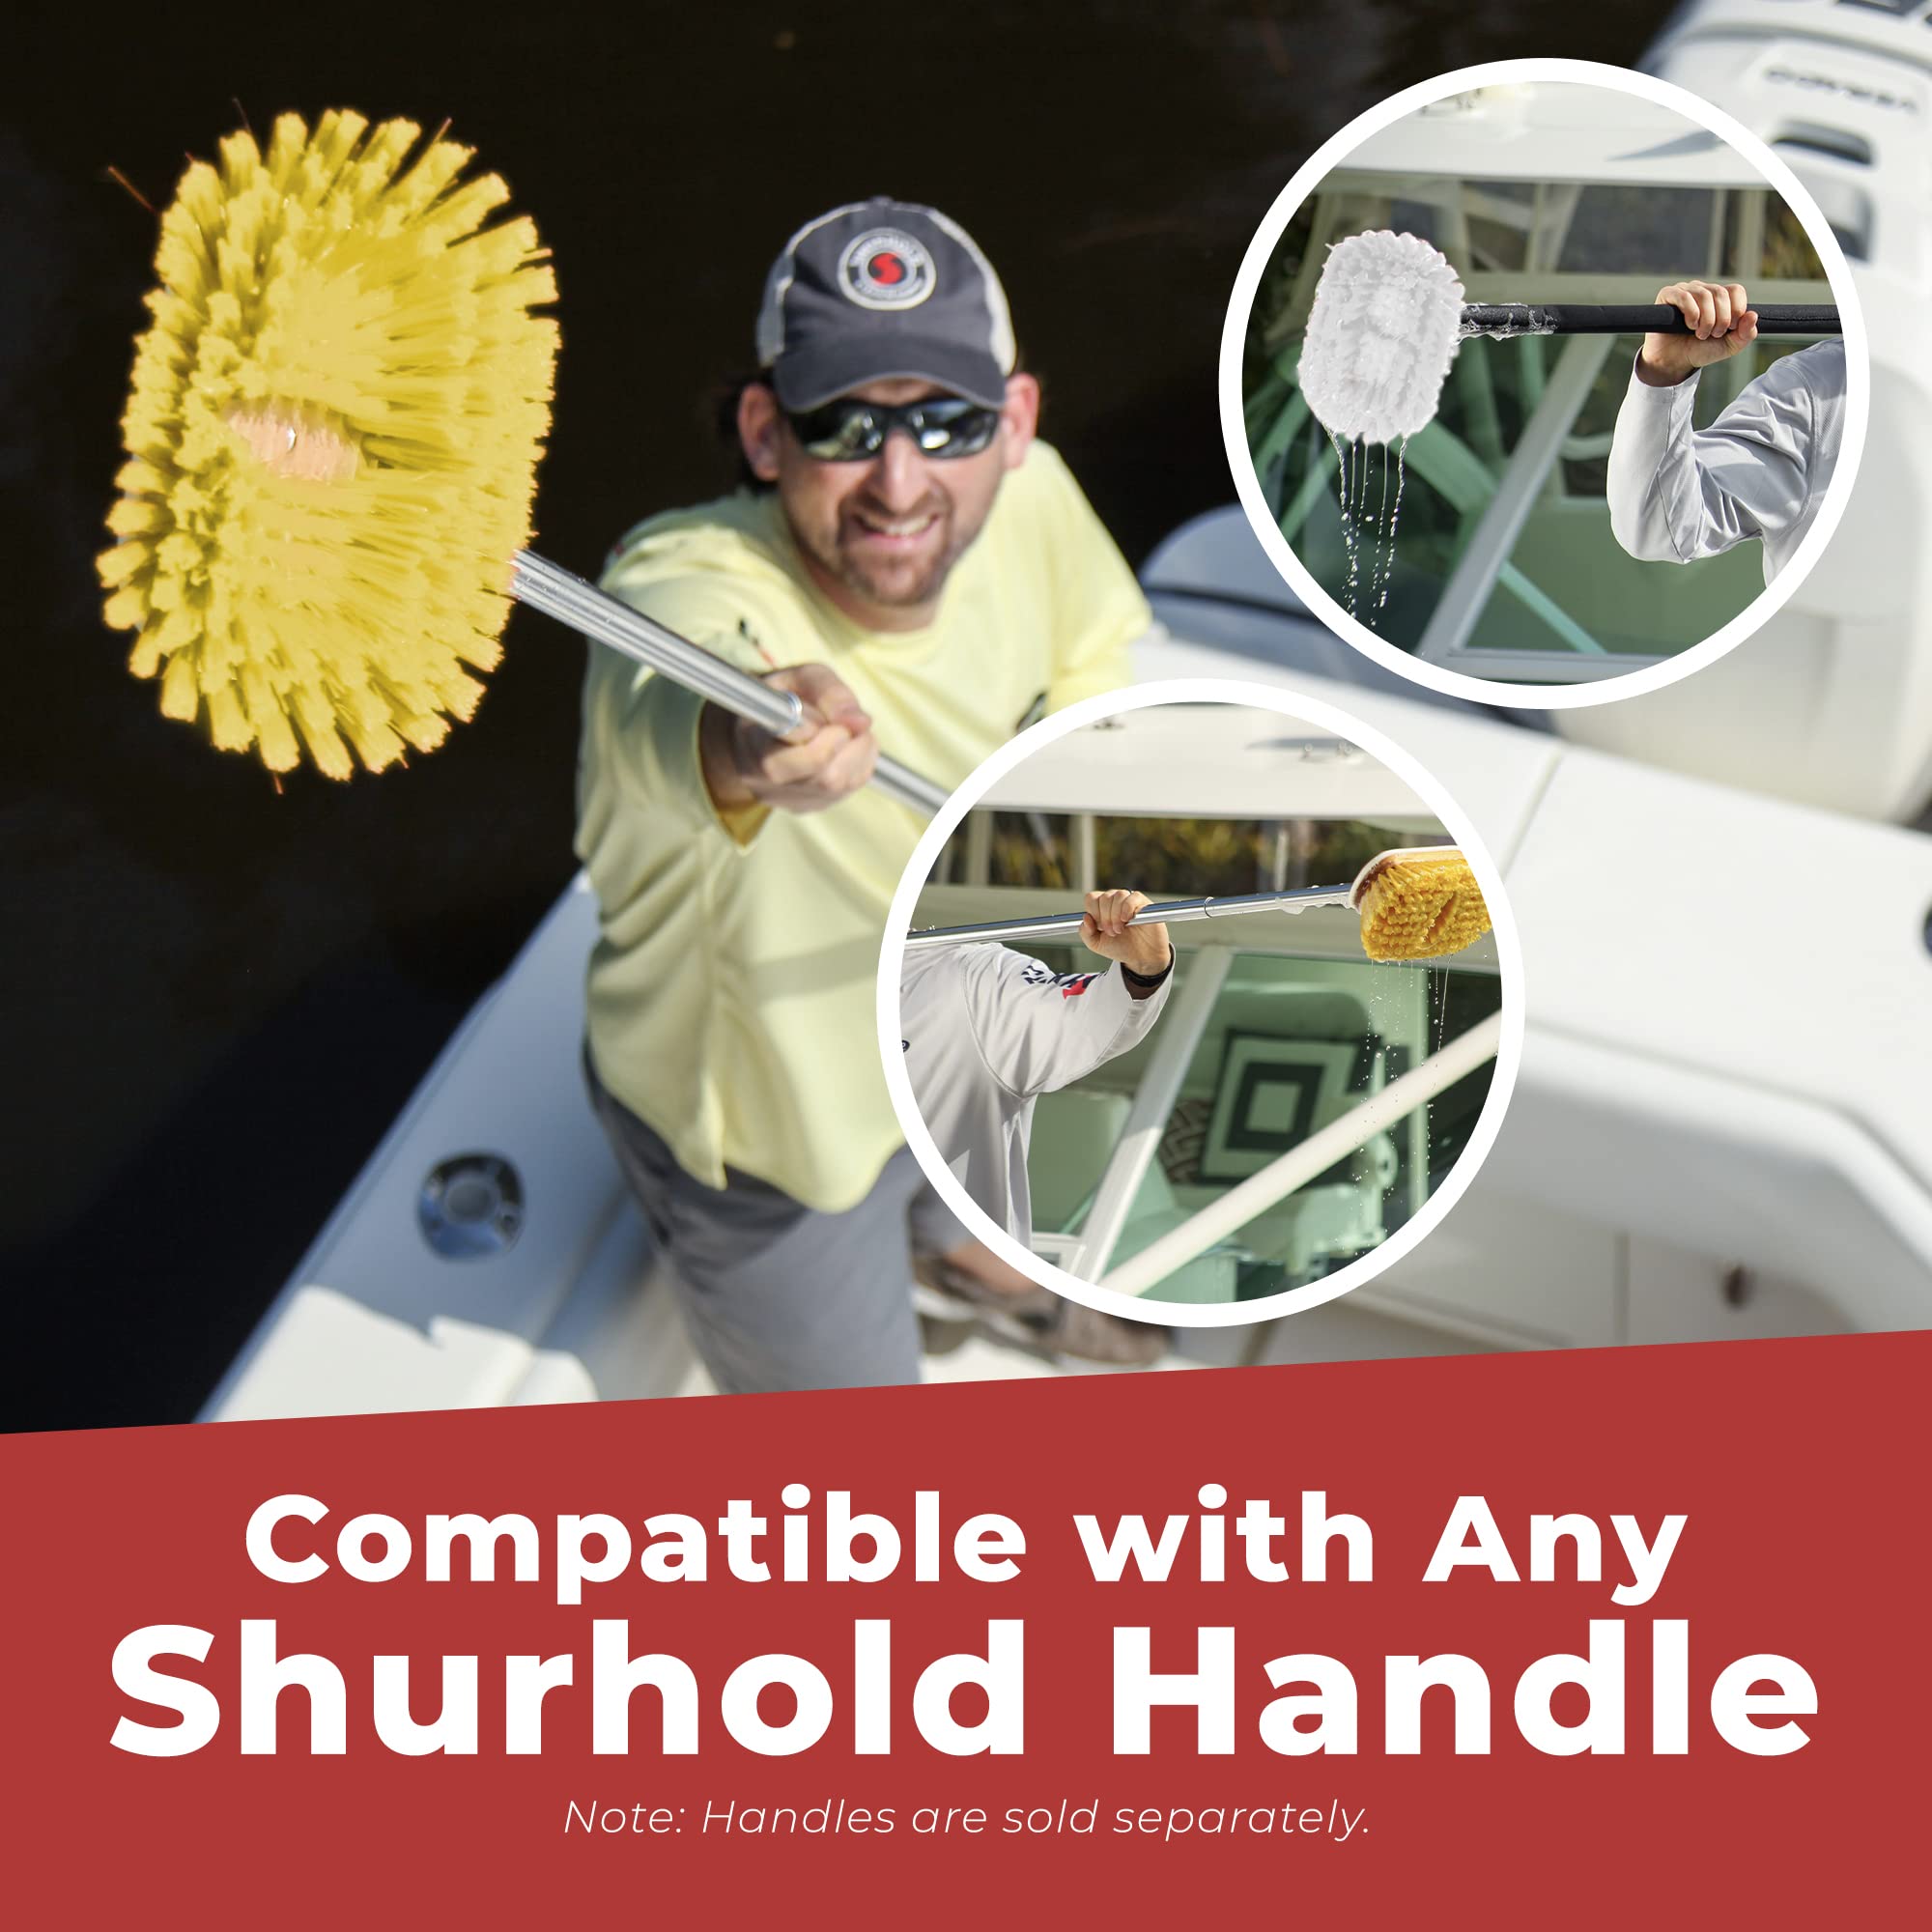 Shurhold 955 6 Inch Medium Bristle Brush, Deck Brush with Yellow Polystyrene Bristles